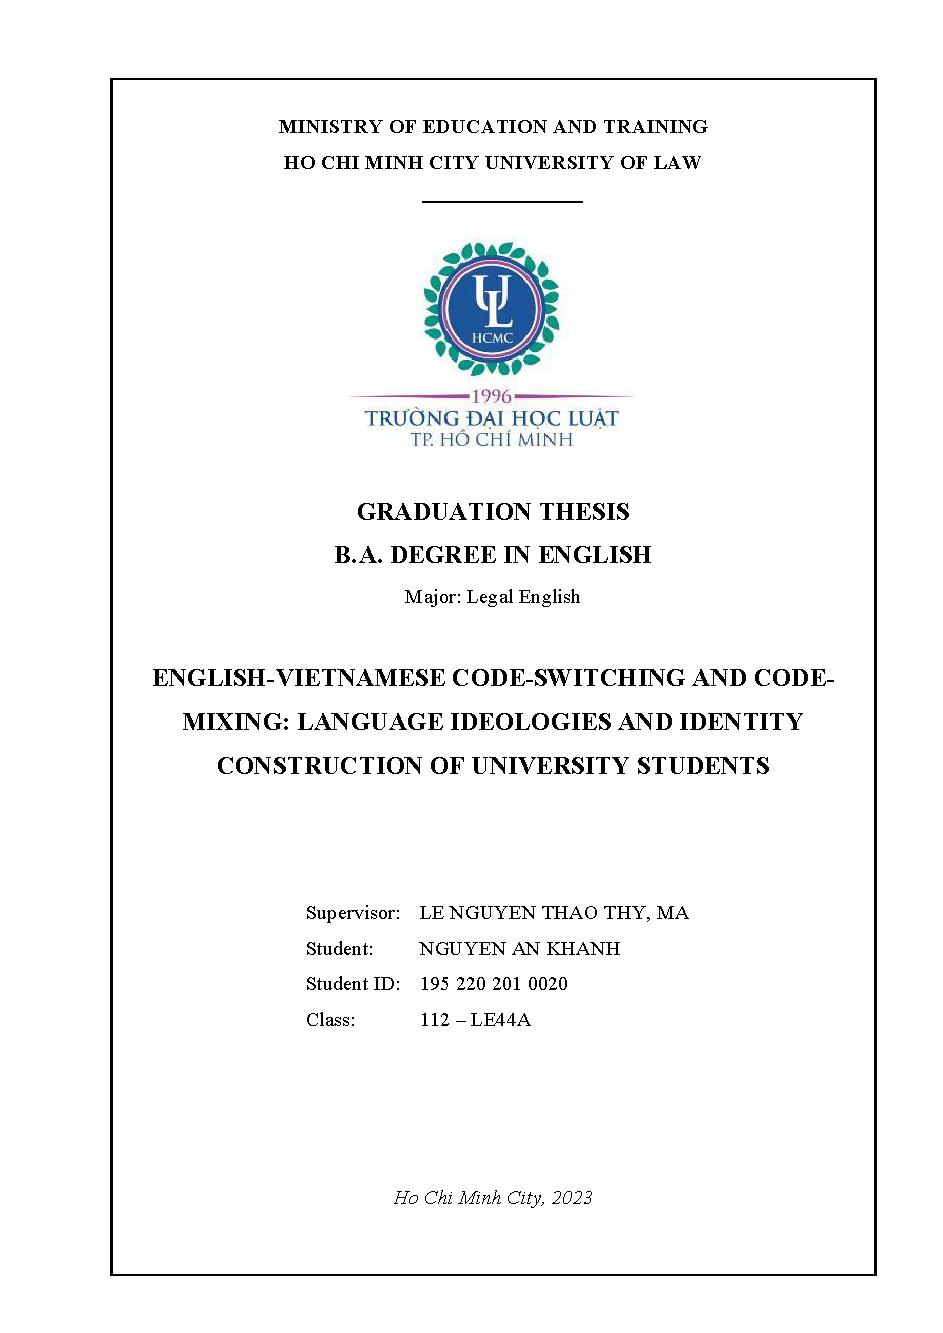 English - VietNamese code-switching and codemixing: language ideologies and identity contruction of University Students